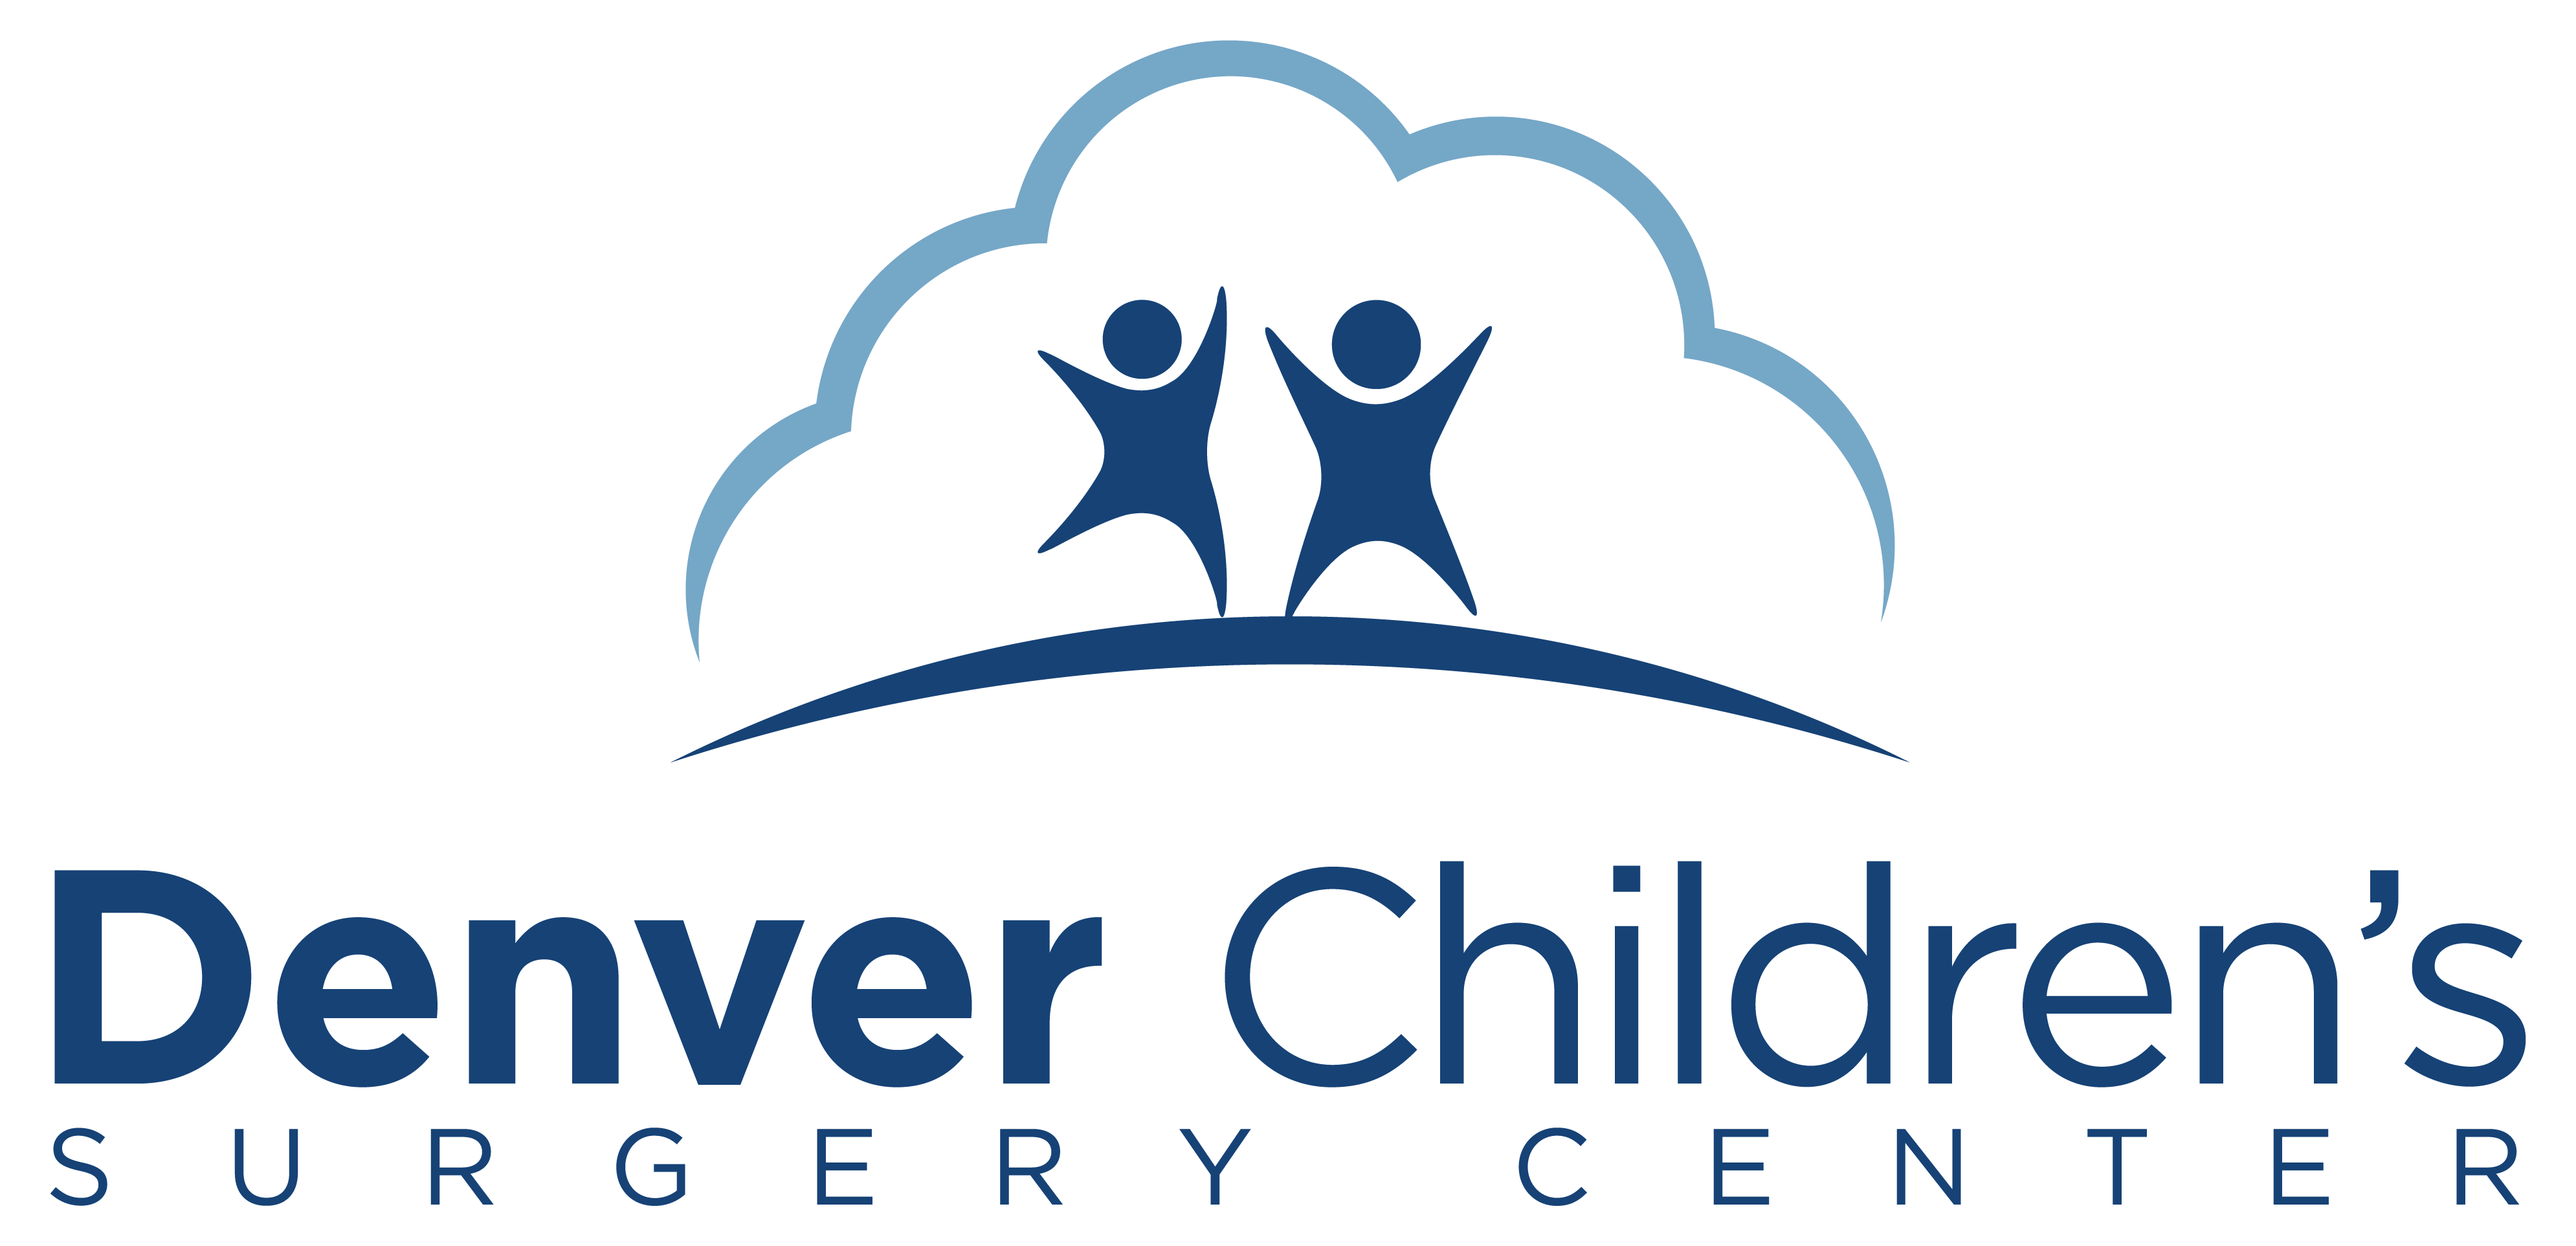 Denver Children’s Surgery Center